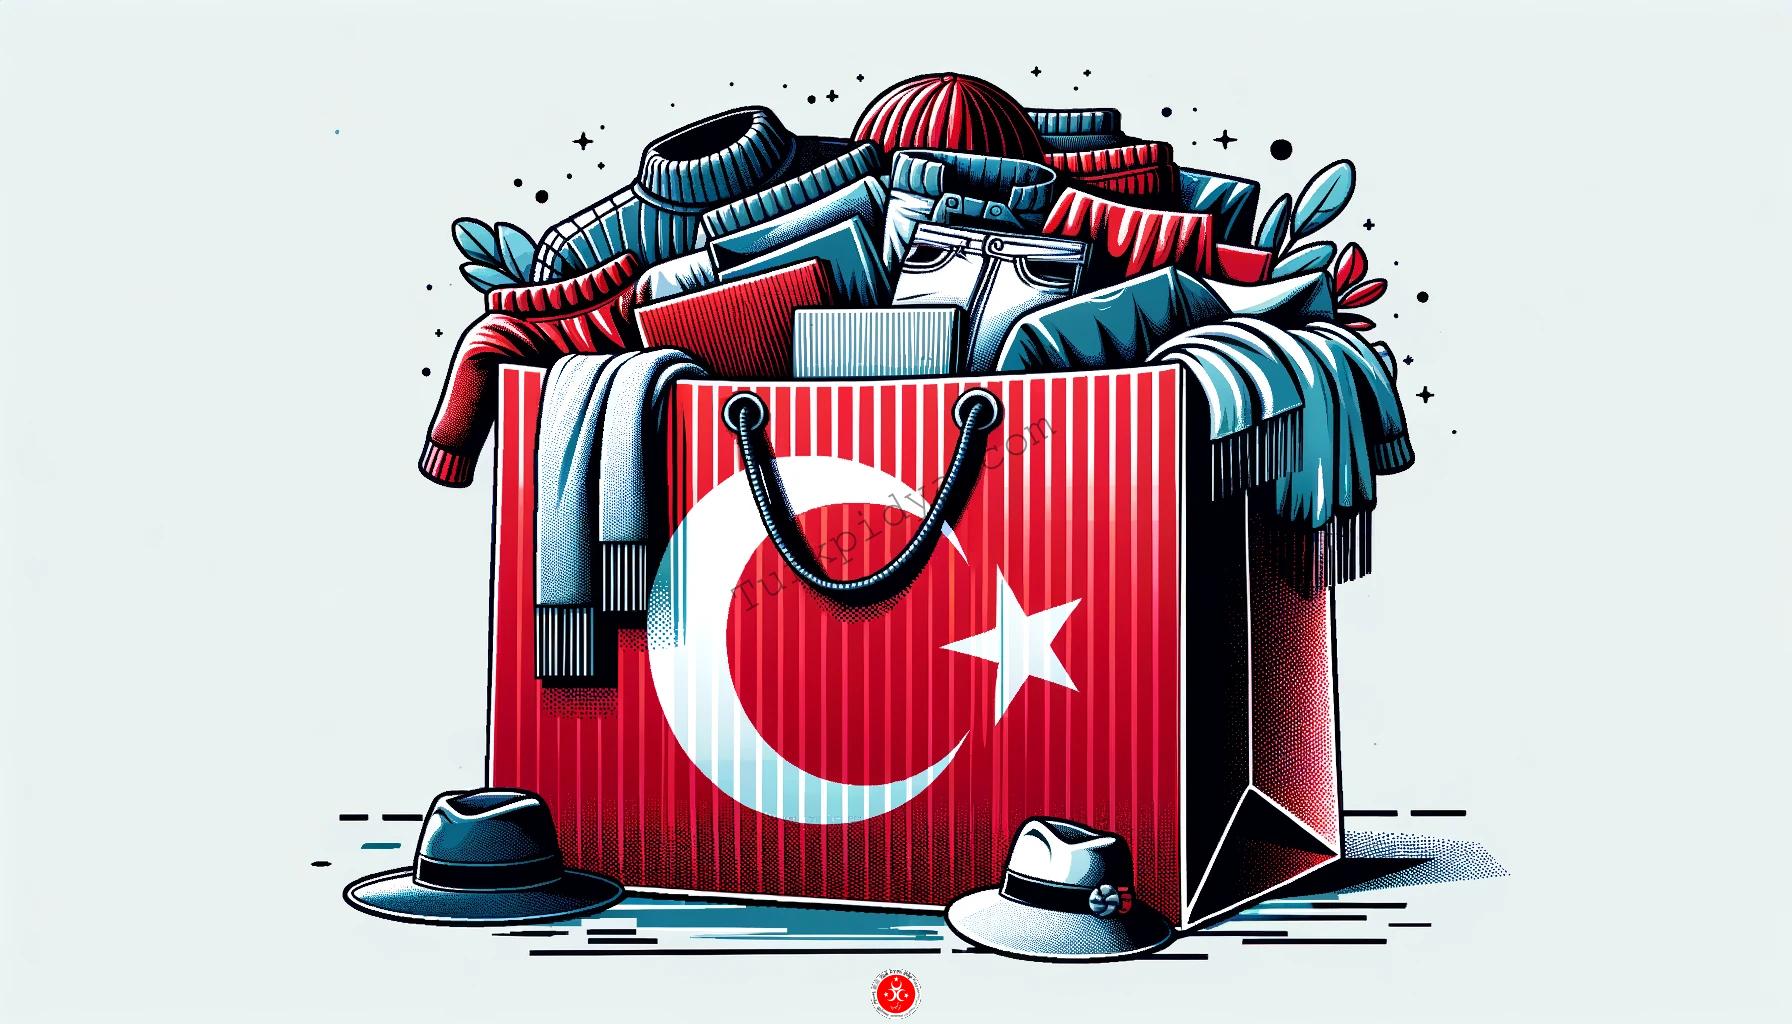 Online winkelen in Turkije